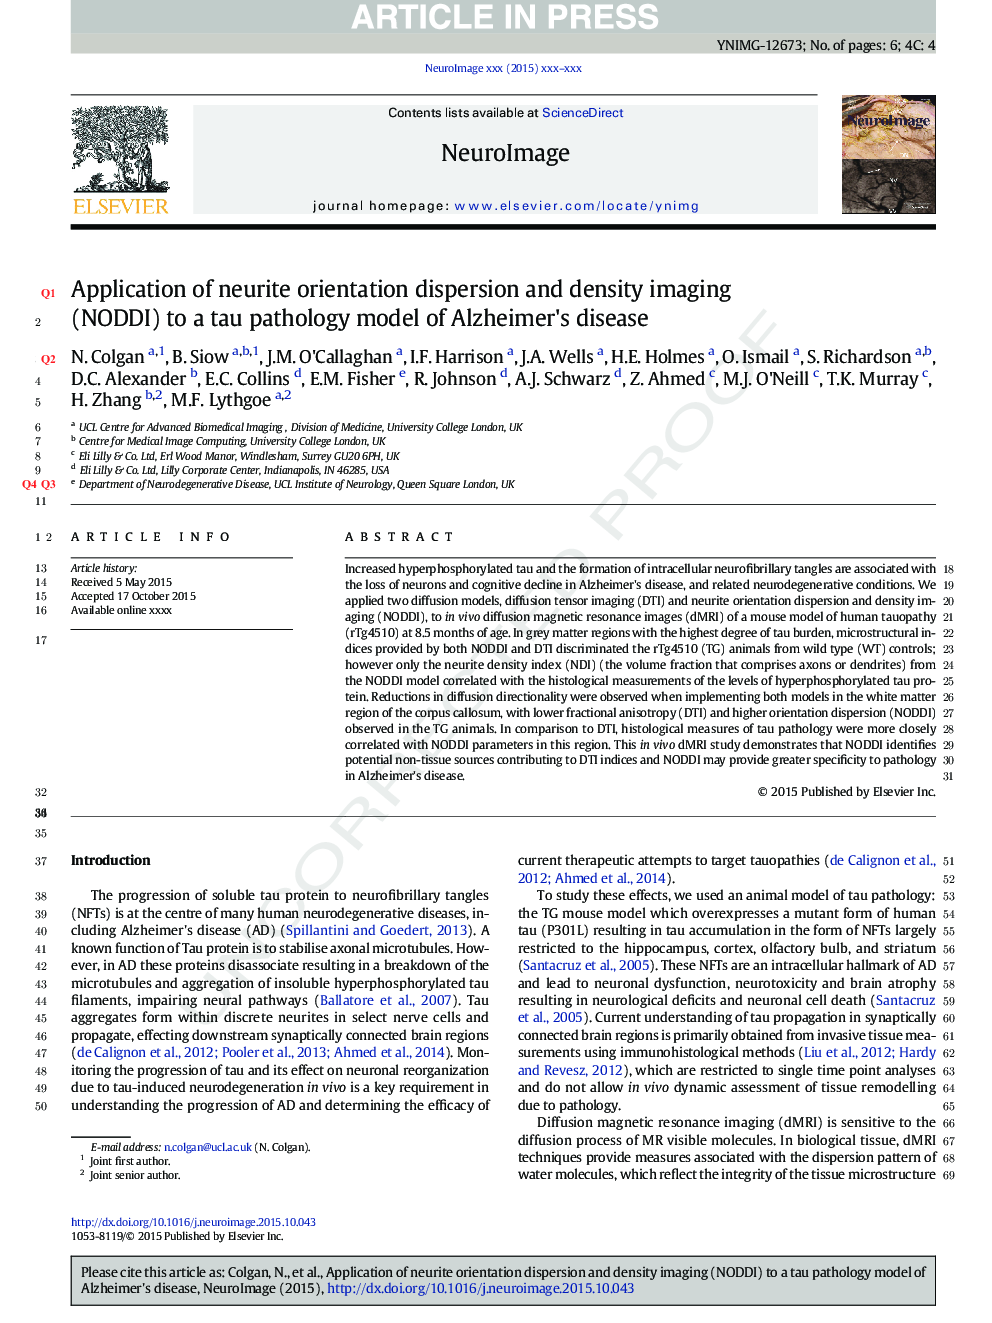 Application of neurite orientation dispersion and density imaging (NODDI) to a tau pathology model of Alzheimer's disease